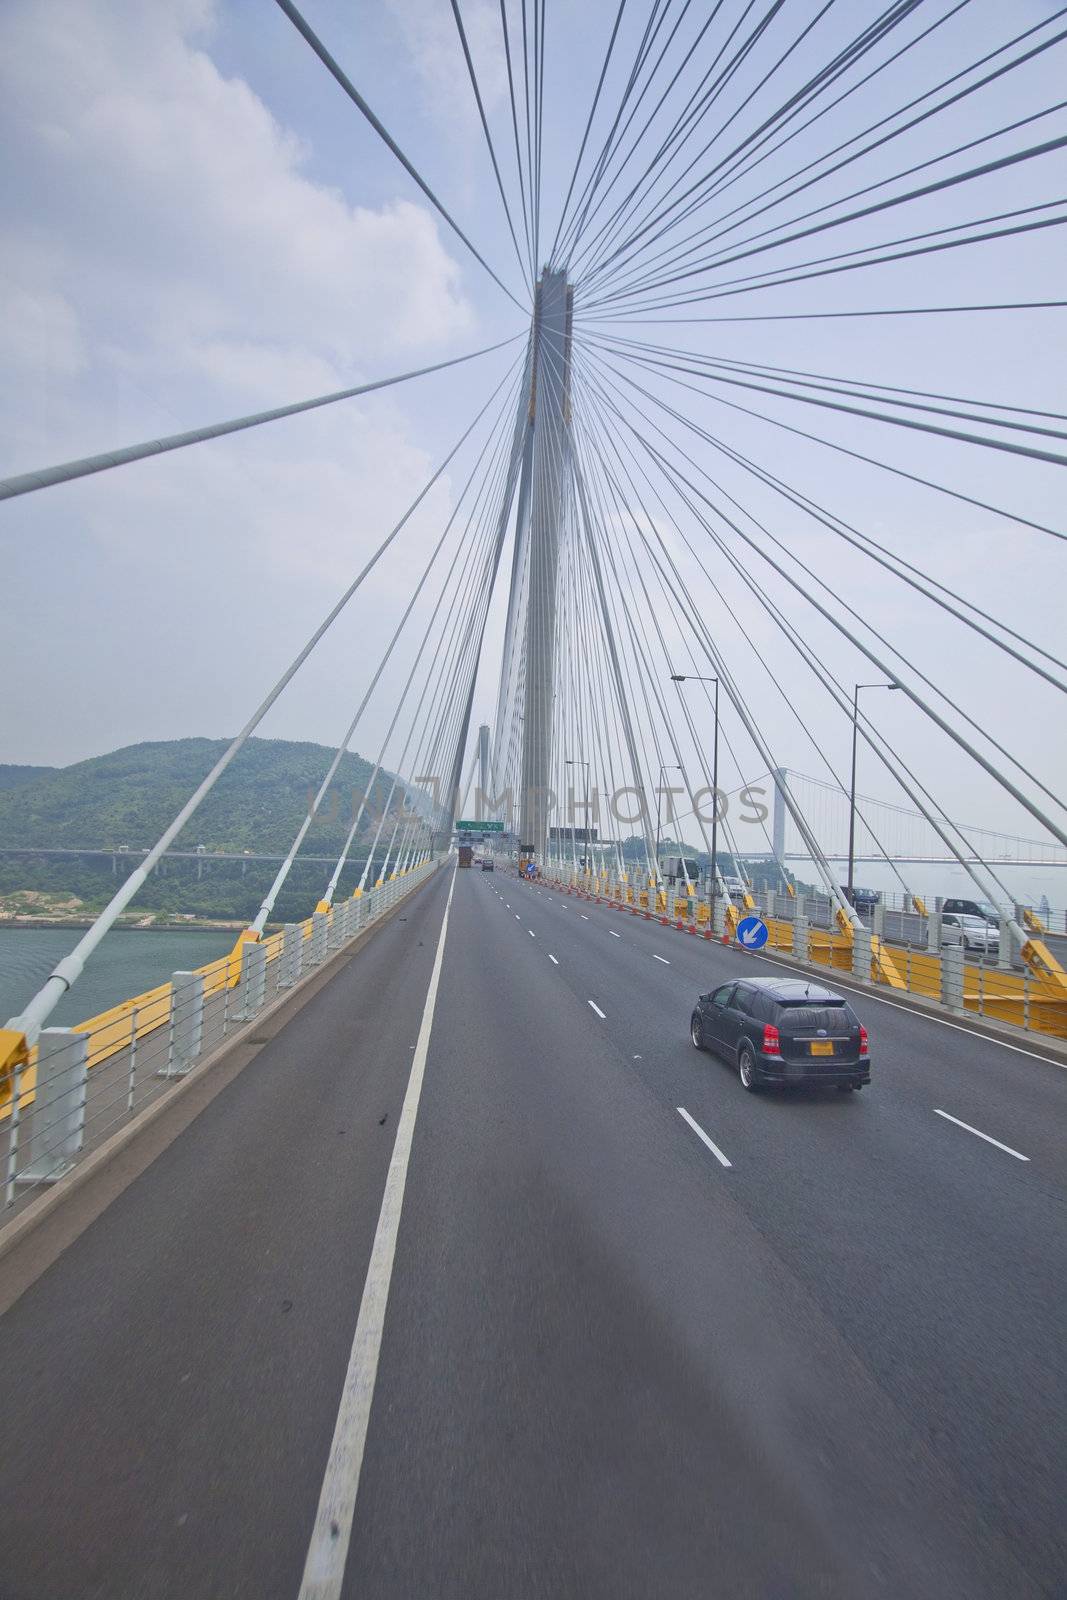 Abstract image of Ting Kau Bridge by kawing921